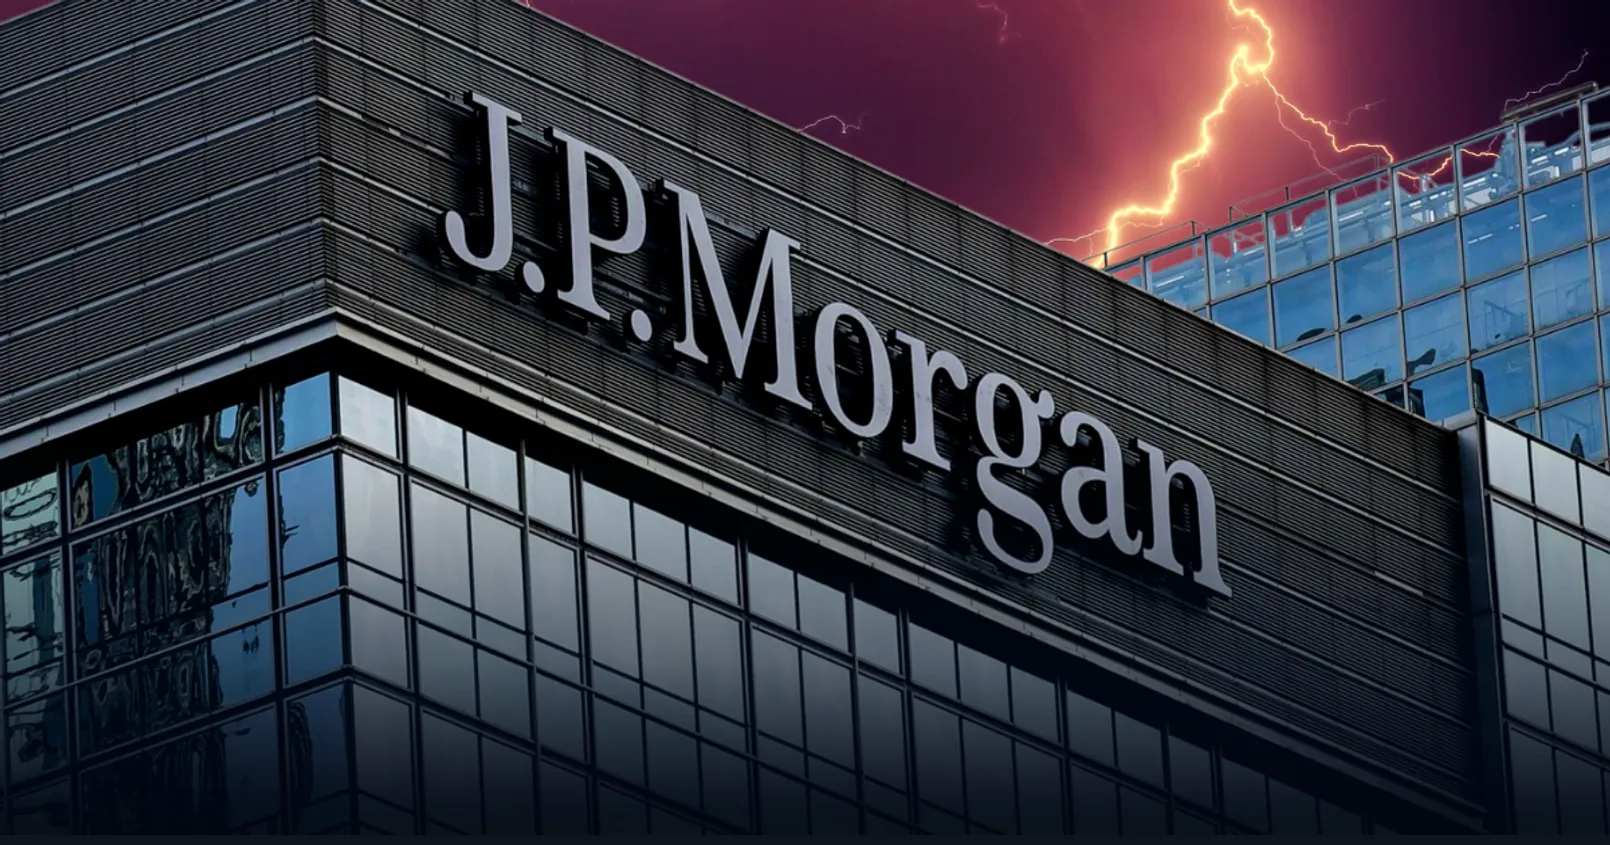 JPMorgan มอง Bitcoin ETF ไม่ใช่อะไรที่มา ‘เปลี่ยนเกม’ และคงมีแต่ 'รายย่อย' เท่านั้น ที่จะหันมาสนใจ